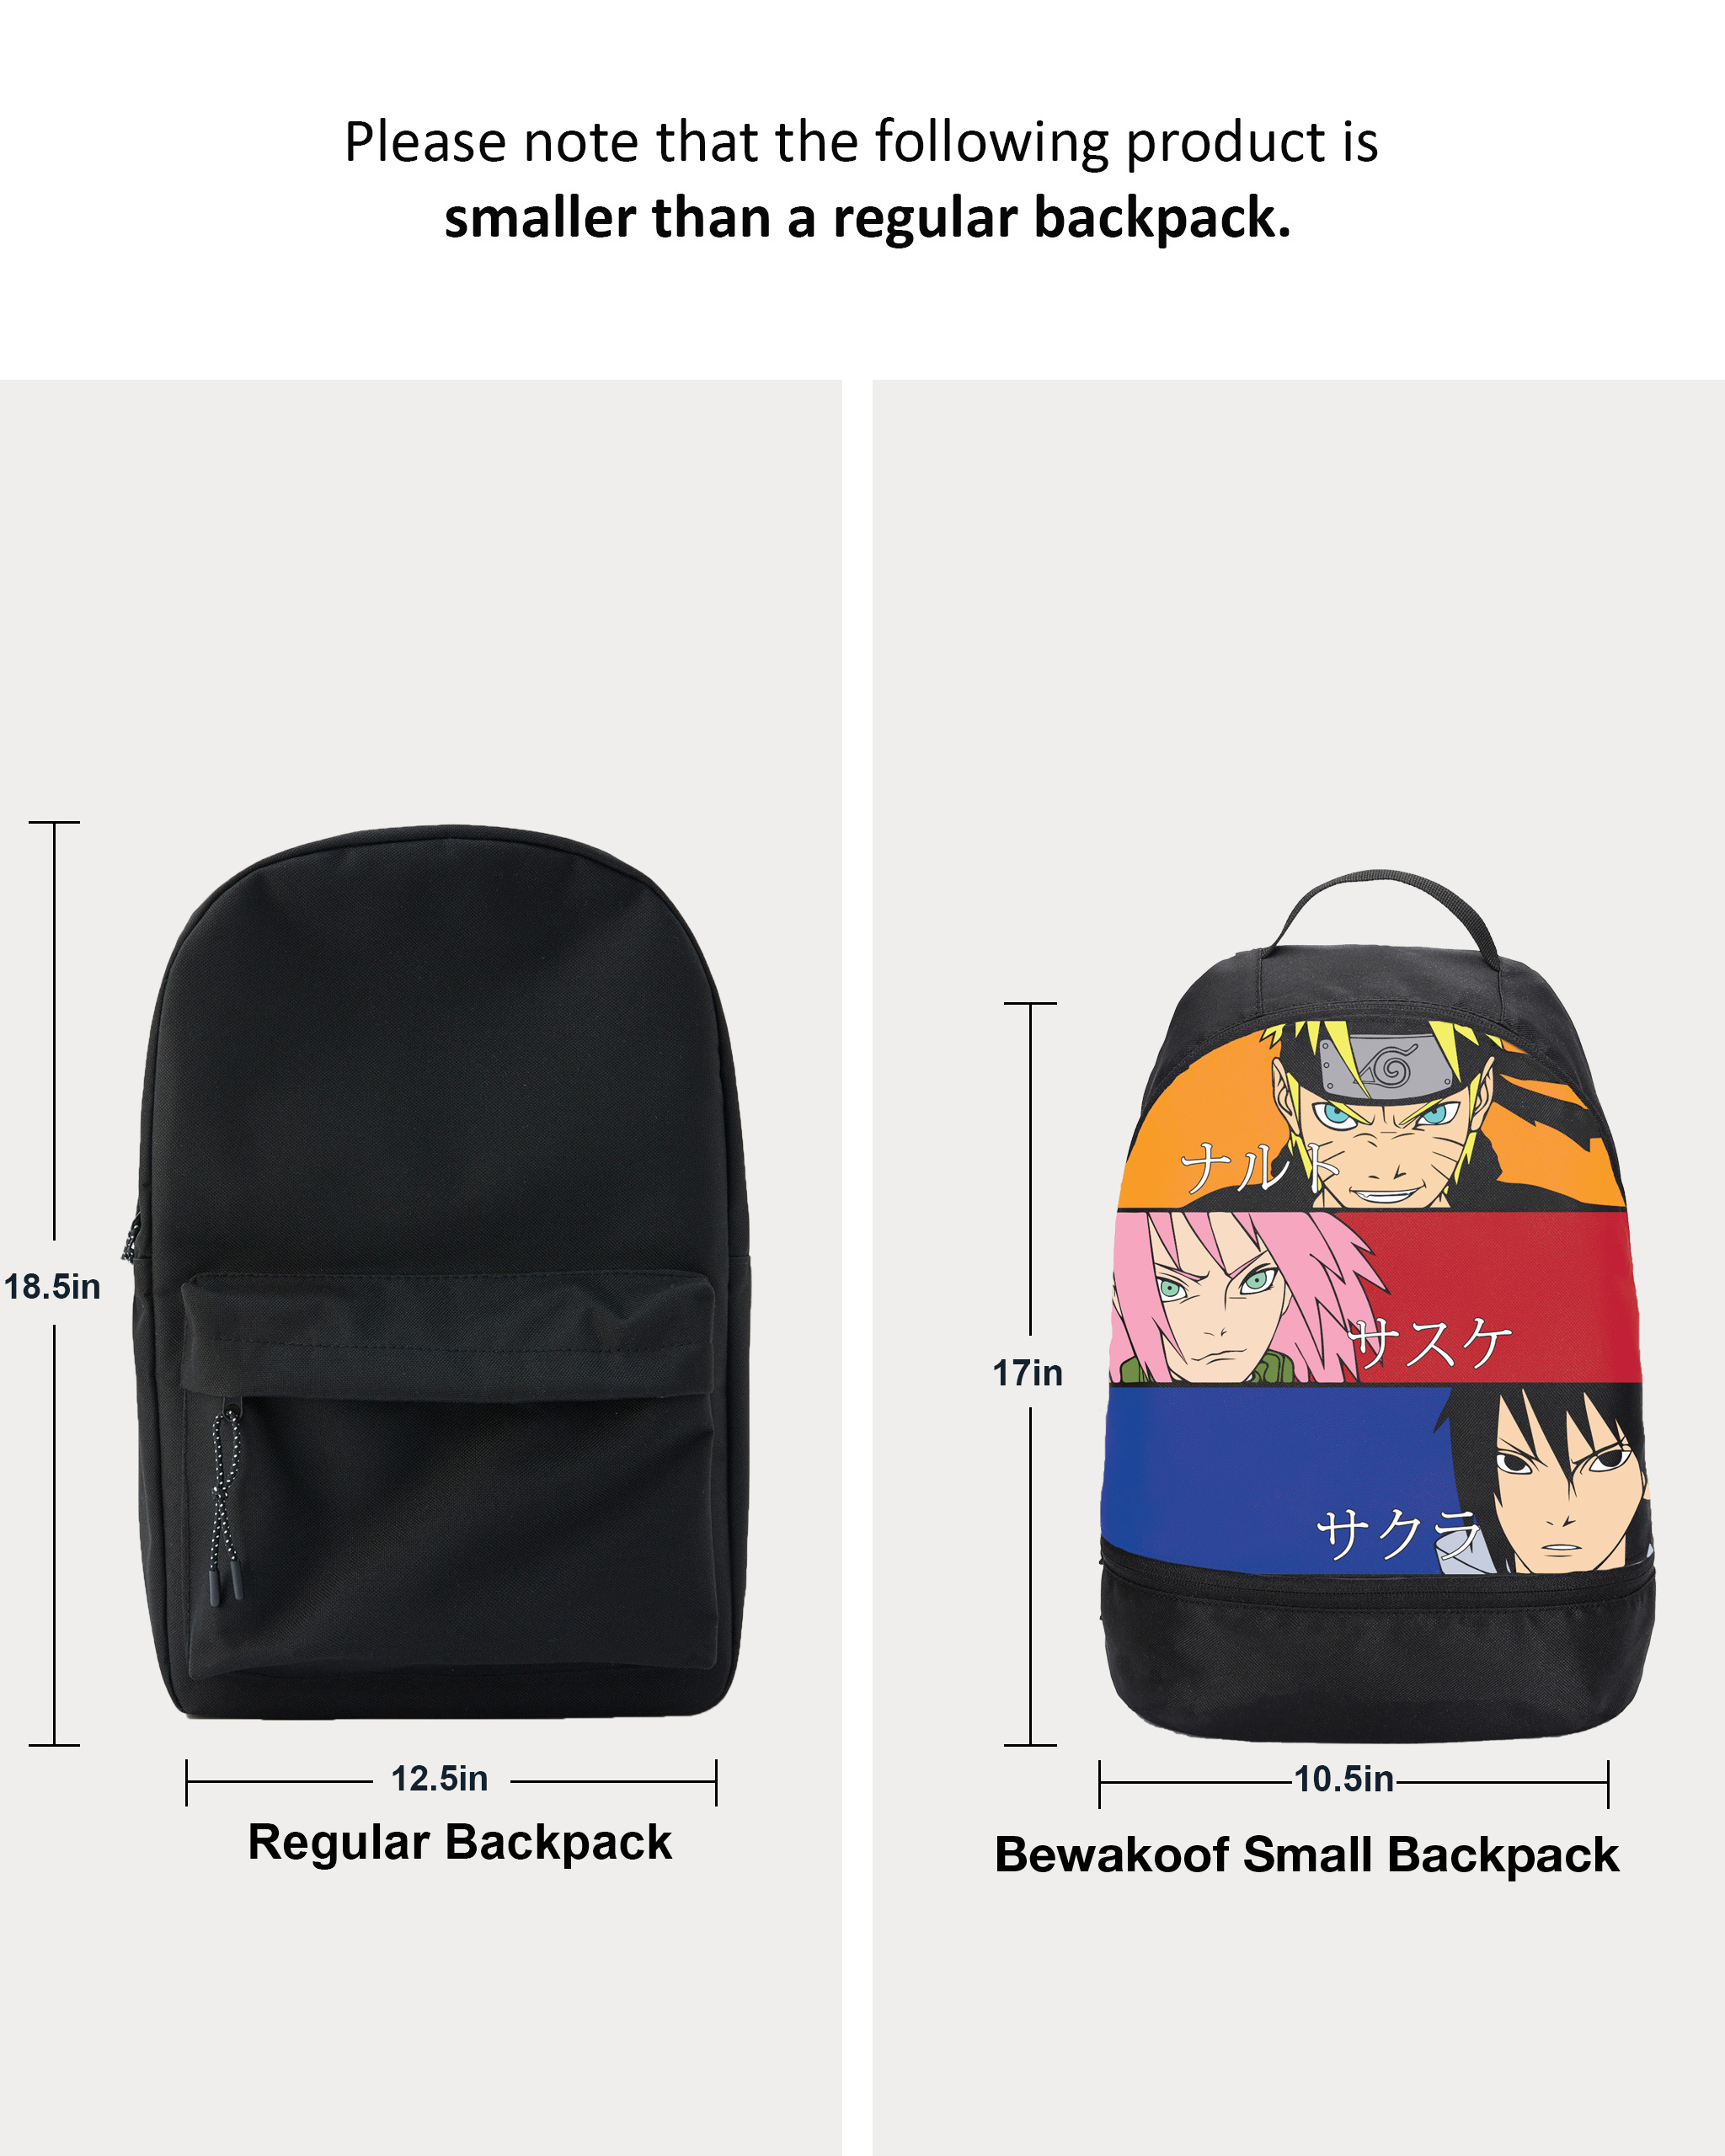 Akatsuki Red Clouds (Naruto Shippuden) Mini Backpack and Sharingan